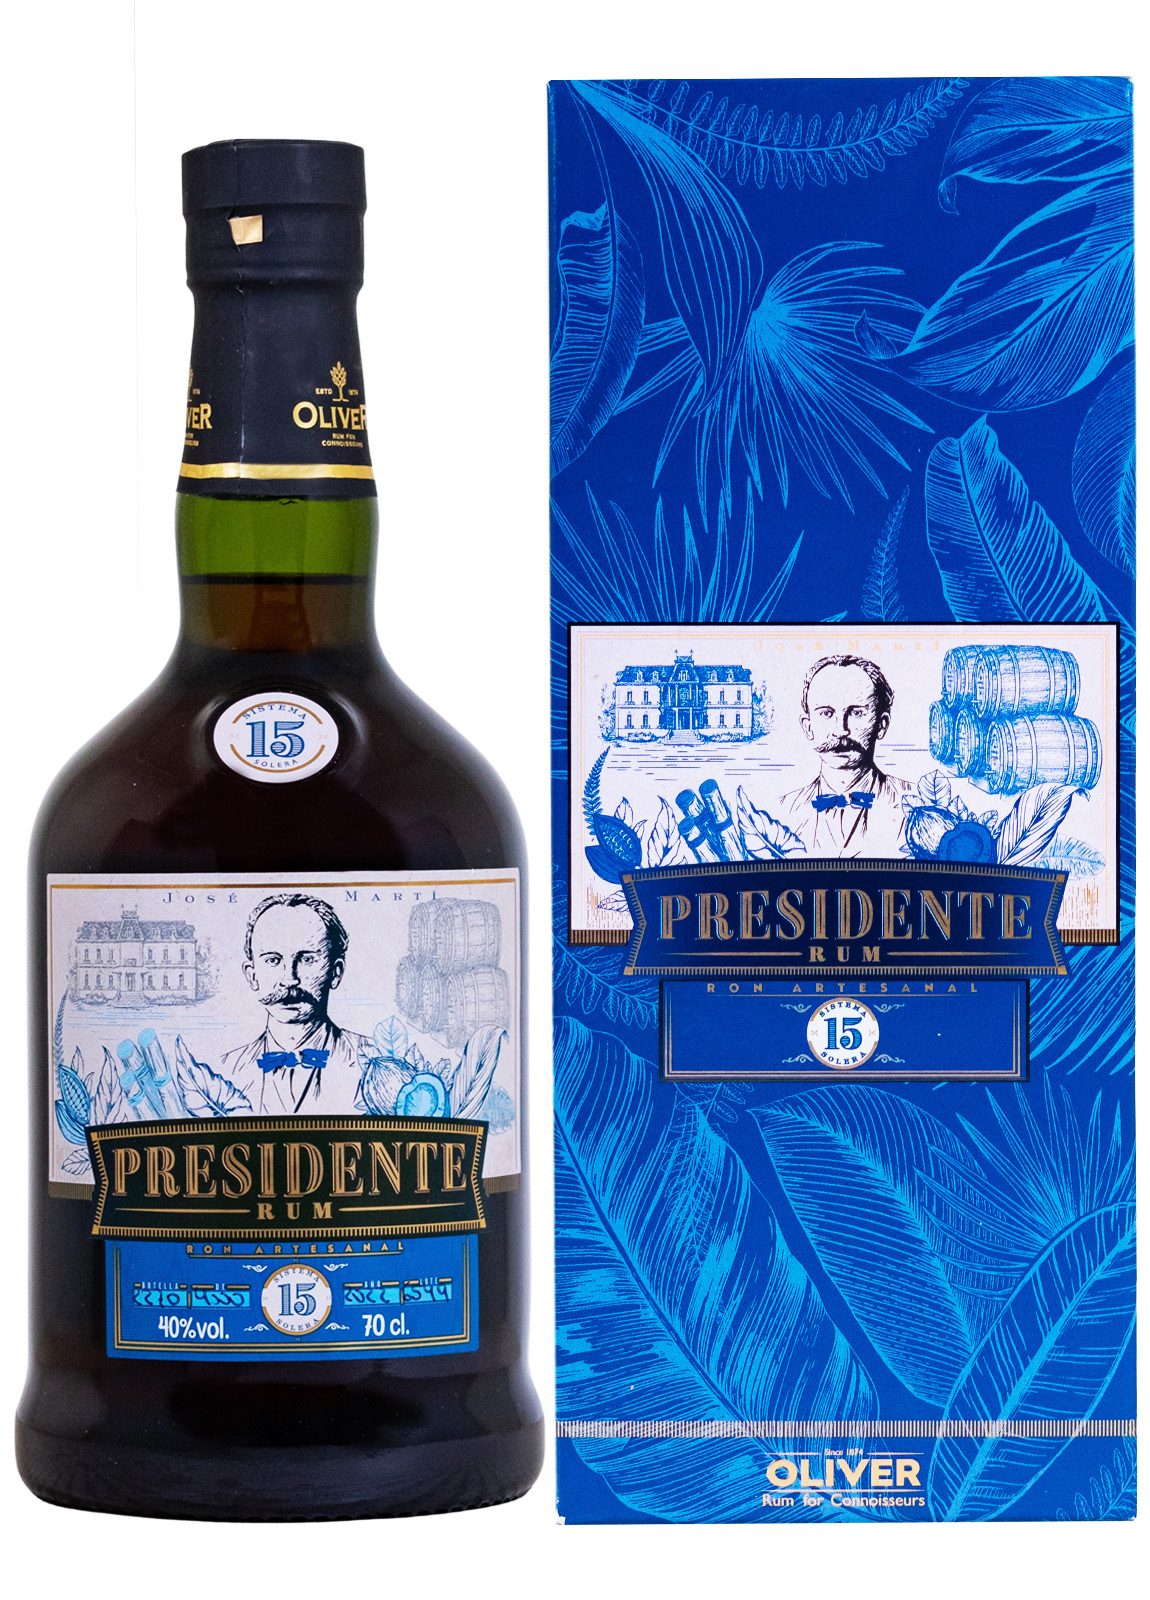 Don Papa MassKara Rum inkl. Geschenkdose (Spirit Drink) 40% 0,7L